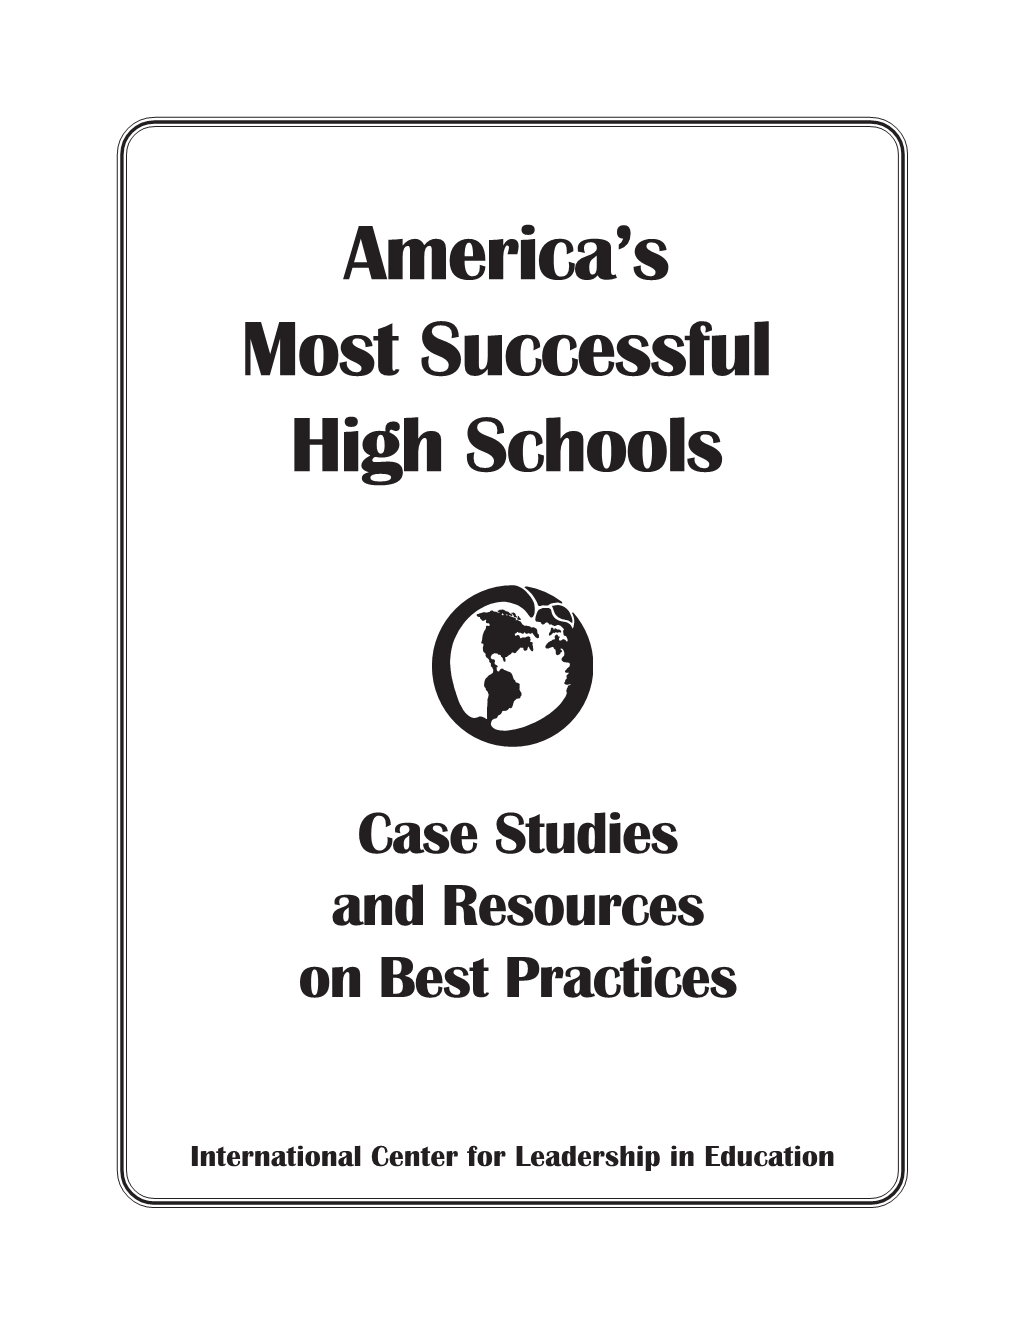 America's Most Successful High Schools